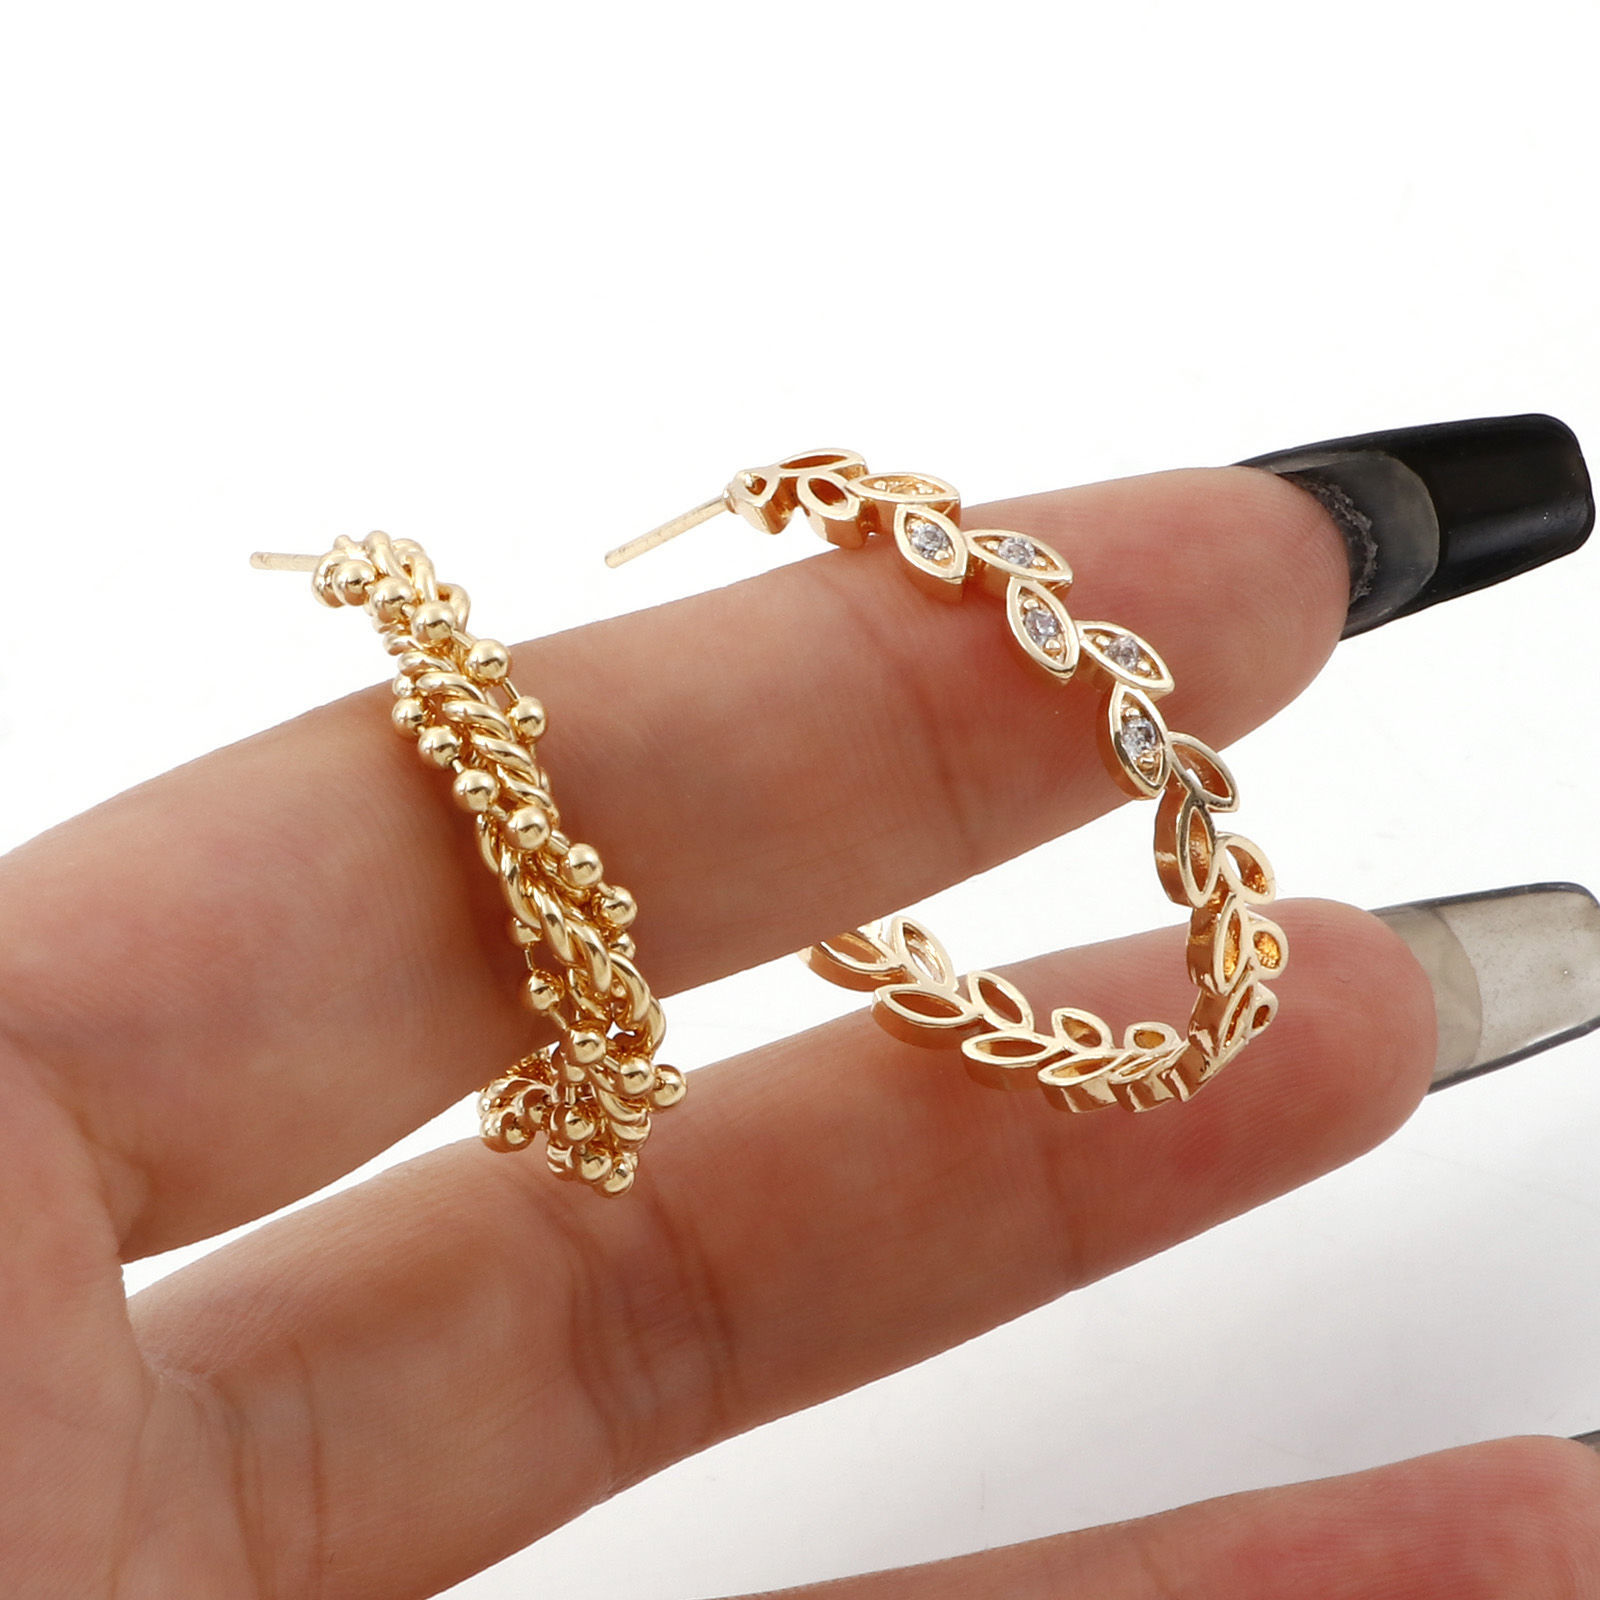 Imagen de Copper Earrings Real Gold Plated C Shape 2 PCs